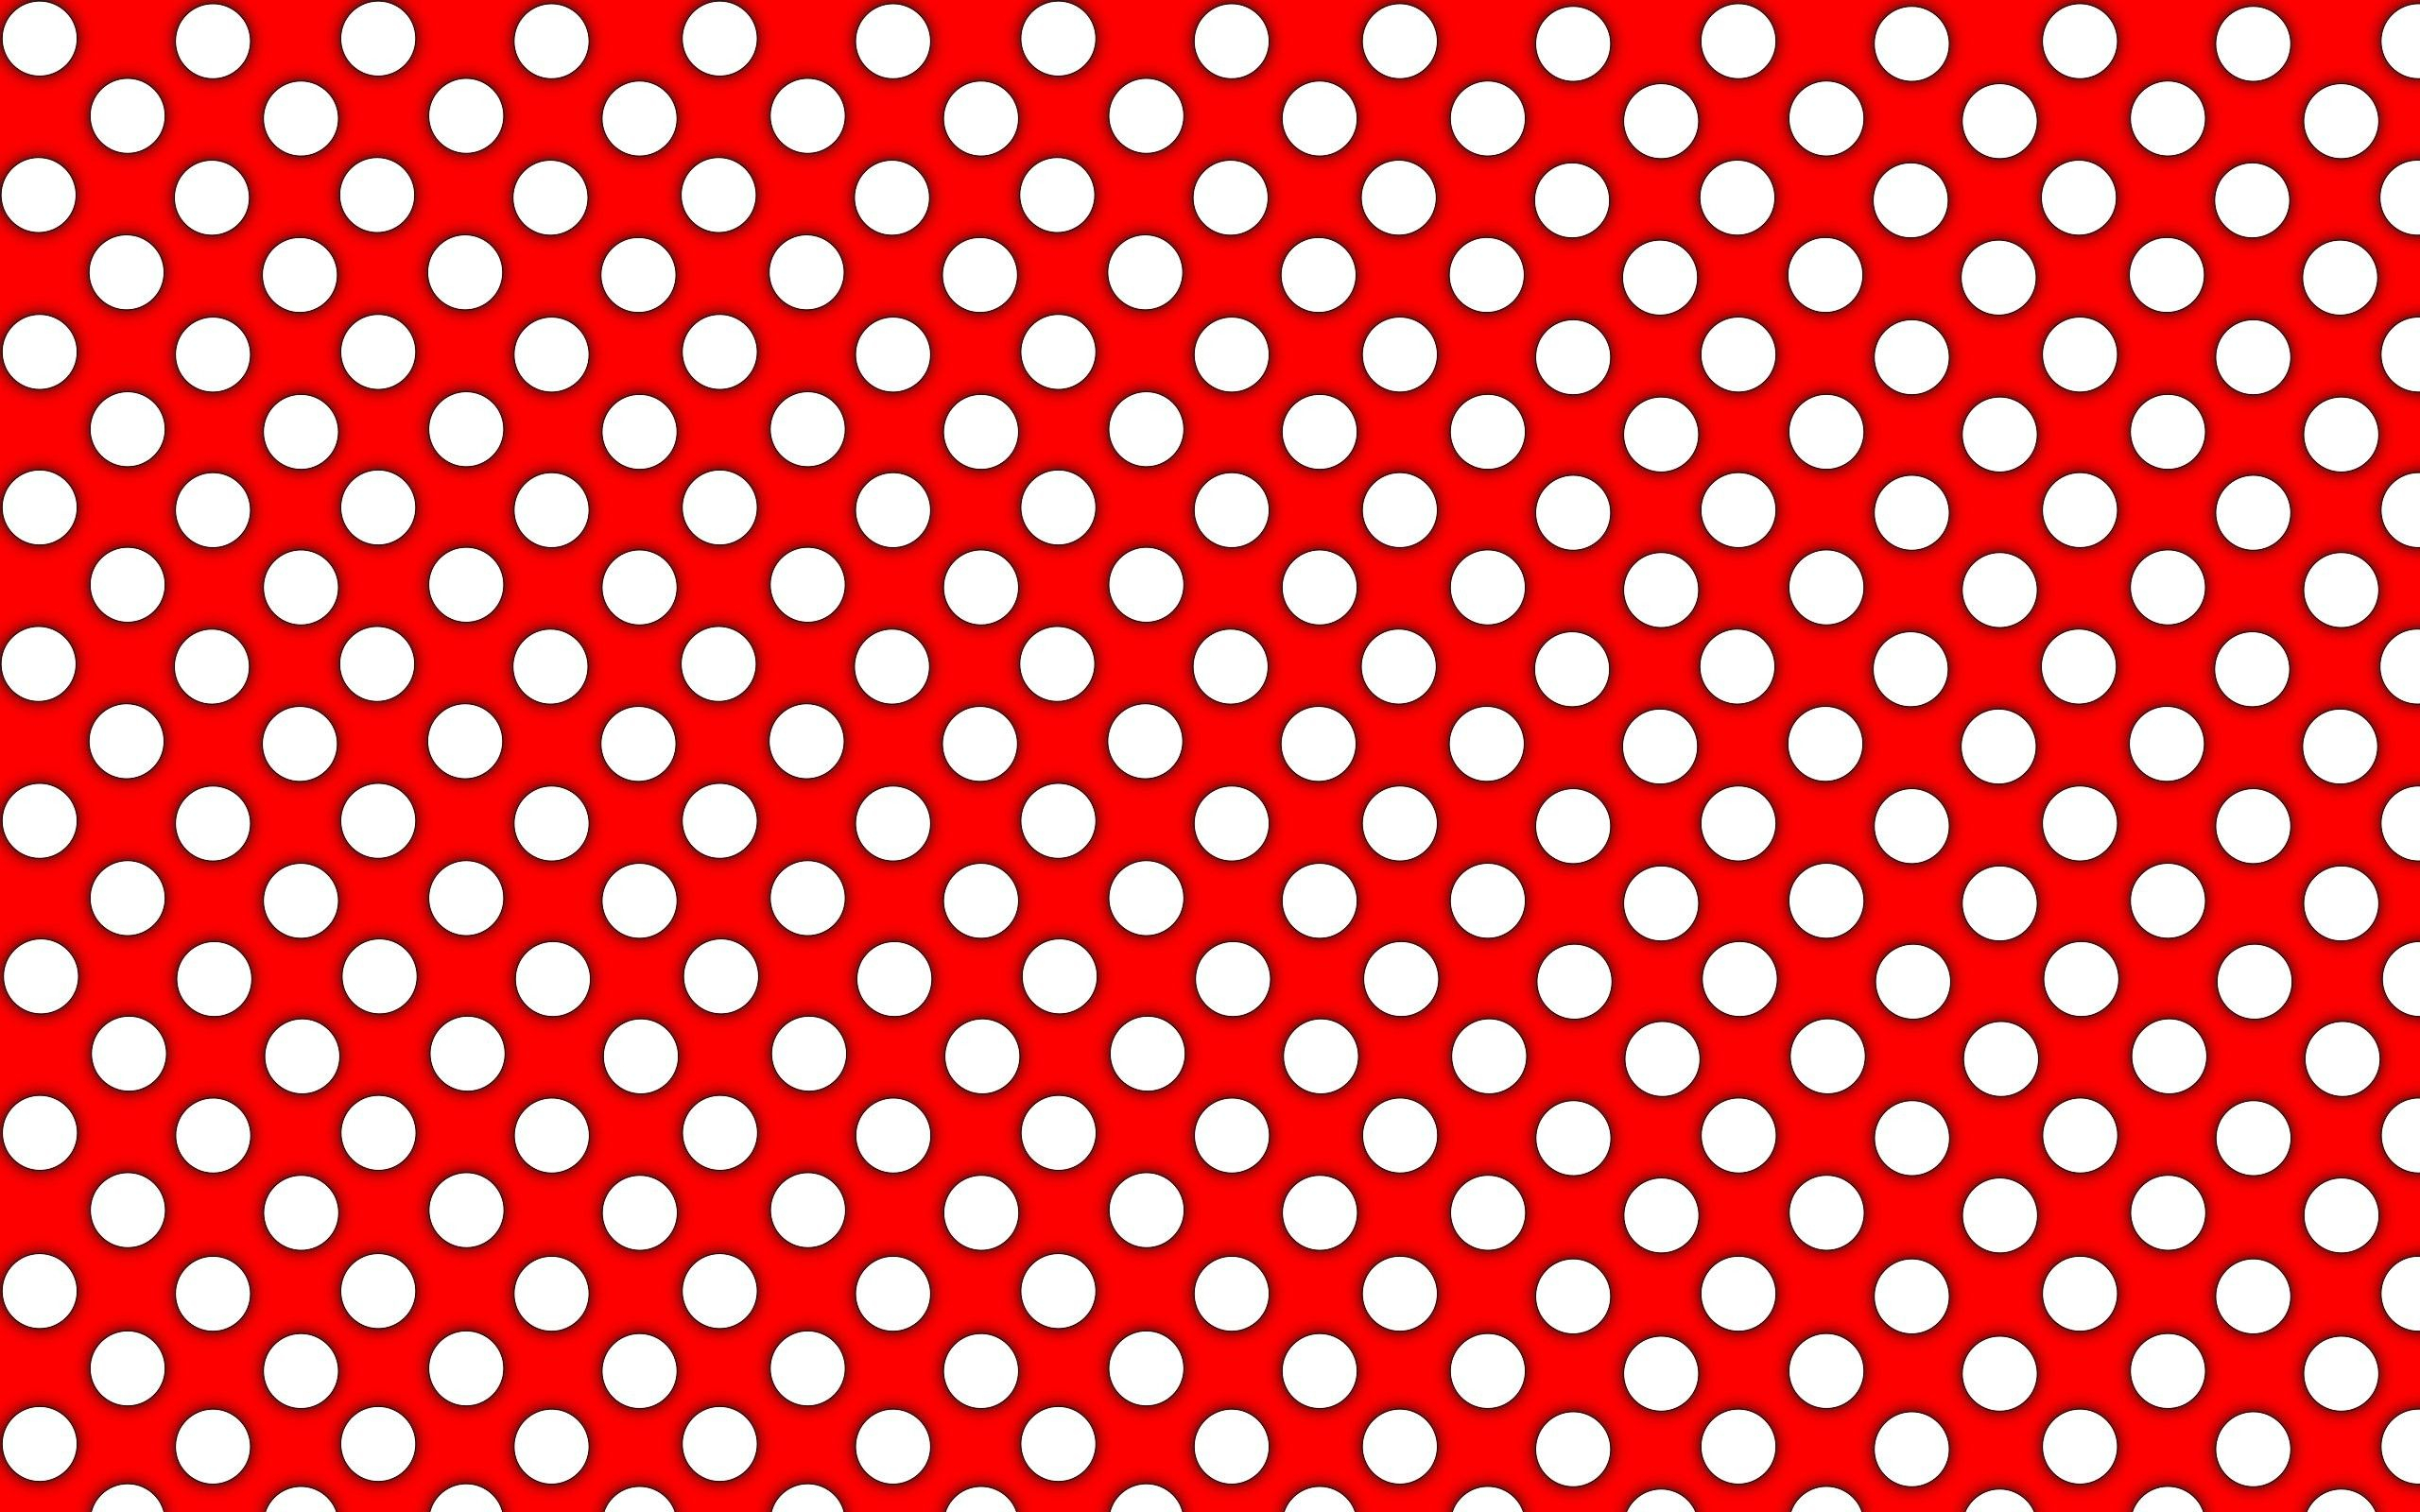 2560x1600 Polka Dot Phone Wallpapers Top Free Polka Dot Phone Backgrounds